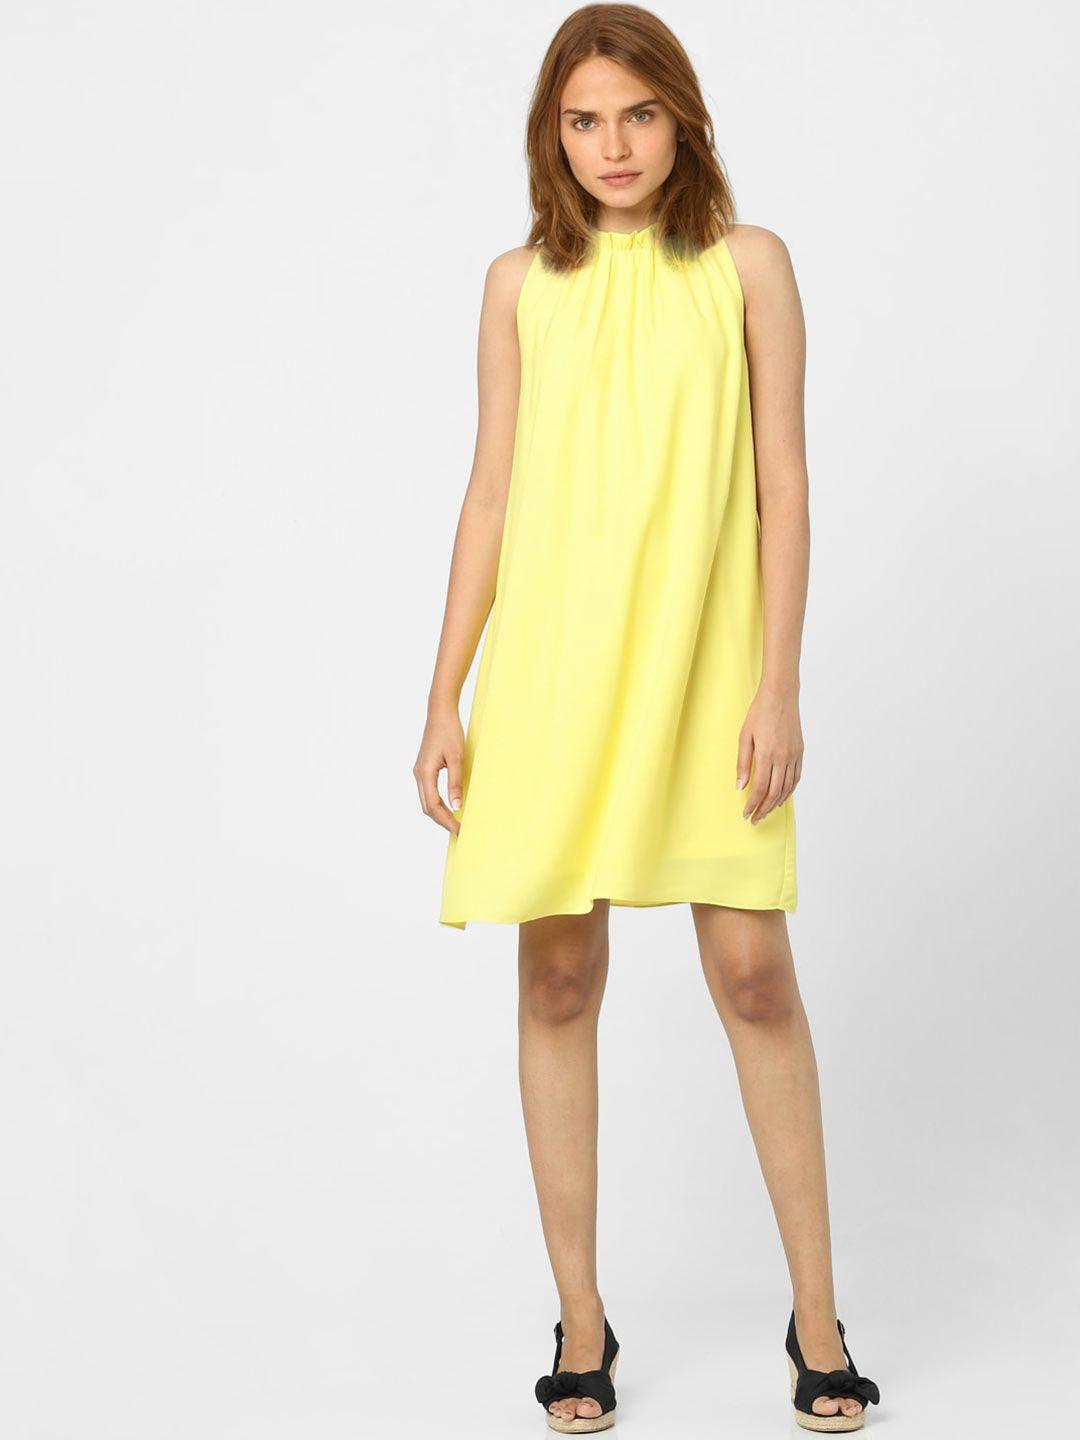 Vero Moda Women Yellow A-Line Dress